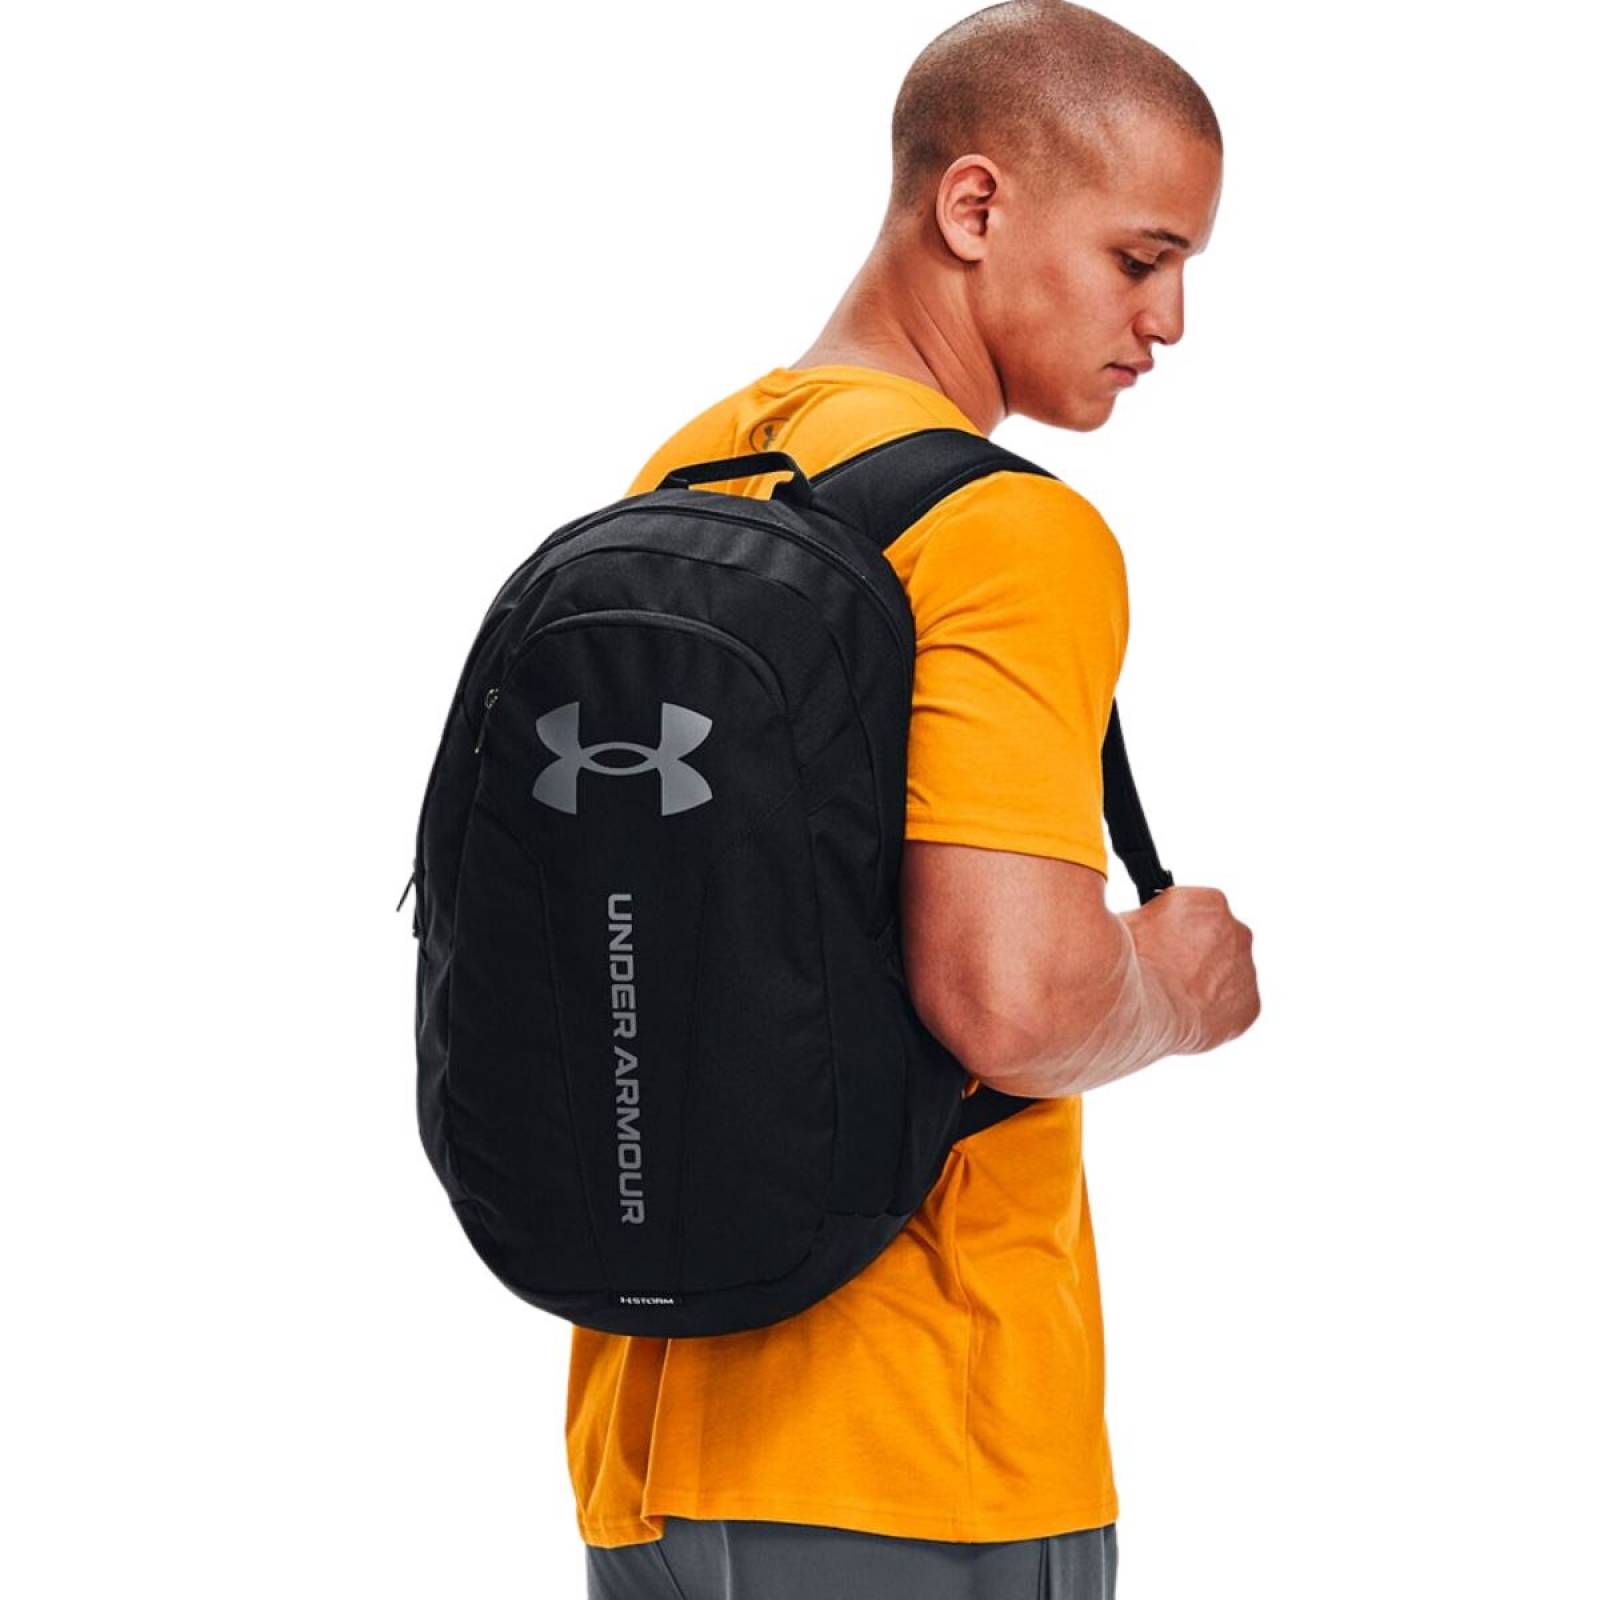 Under Armour Ua Hustle 5.0 Backpack negro mochila deporte niño